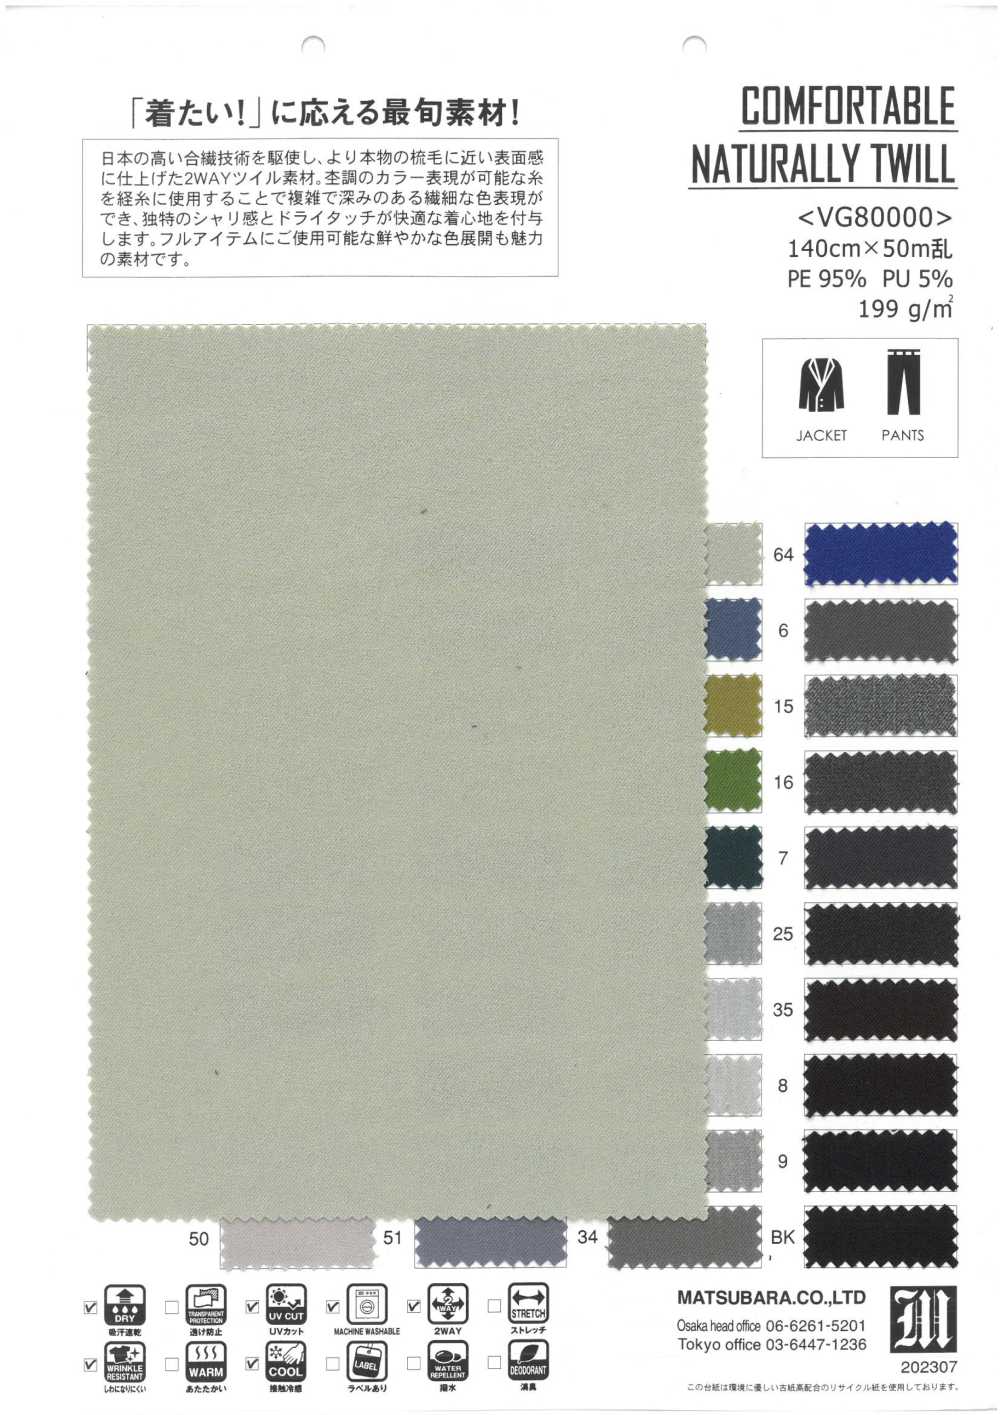 VG80000 CONFORTABLE NATURELLEMENT TWILL[Fabrication De Textile] Matsubara